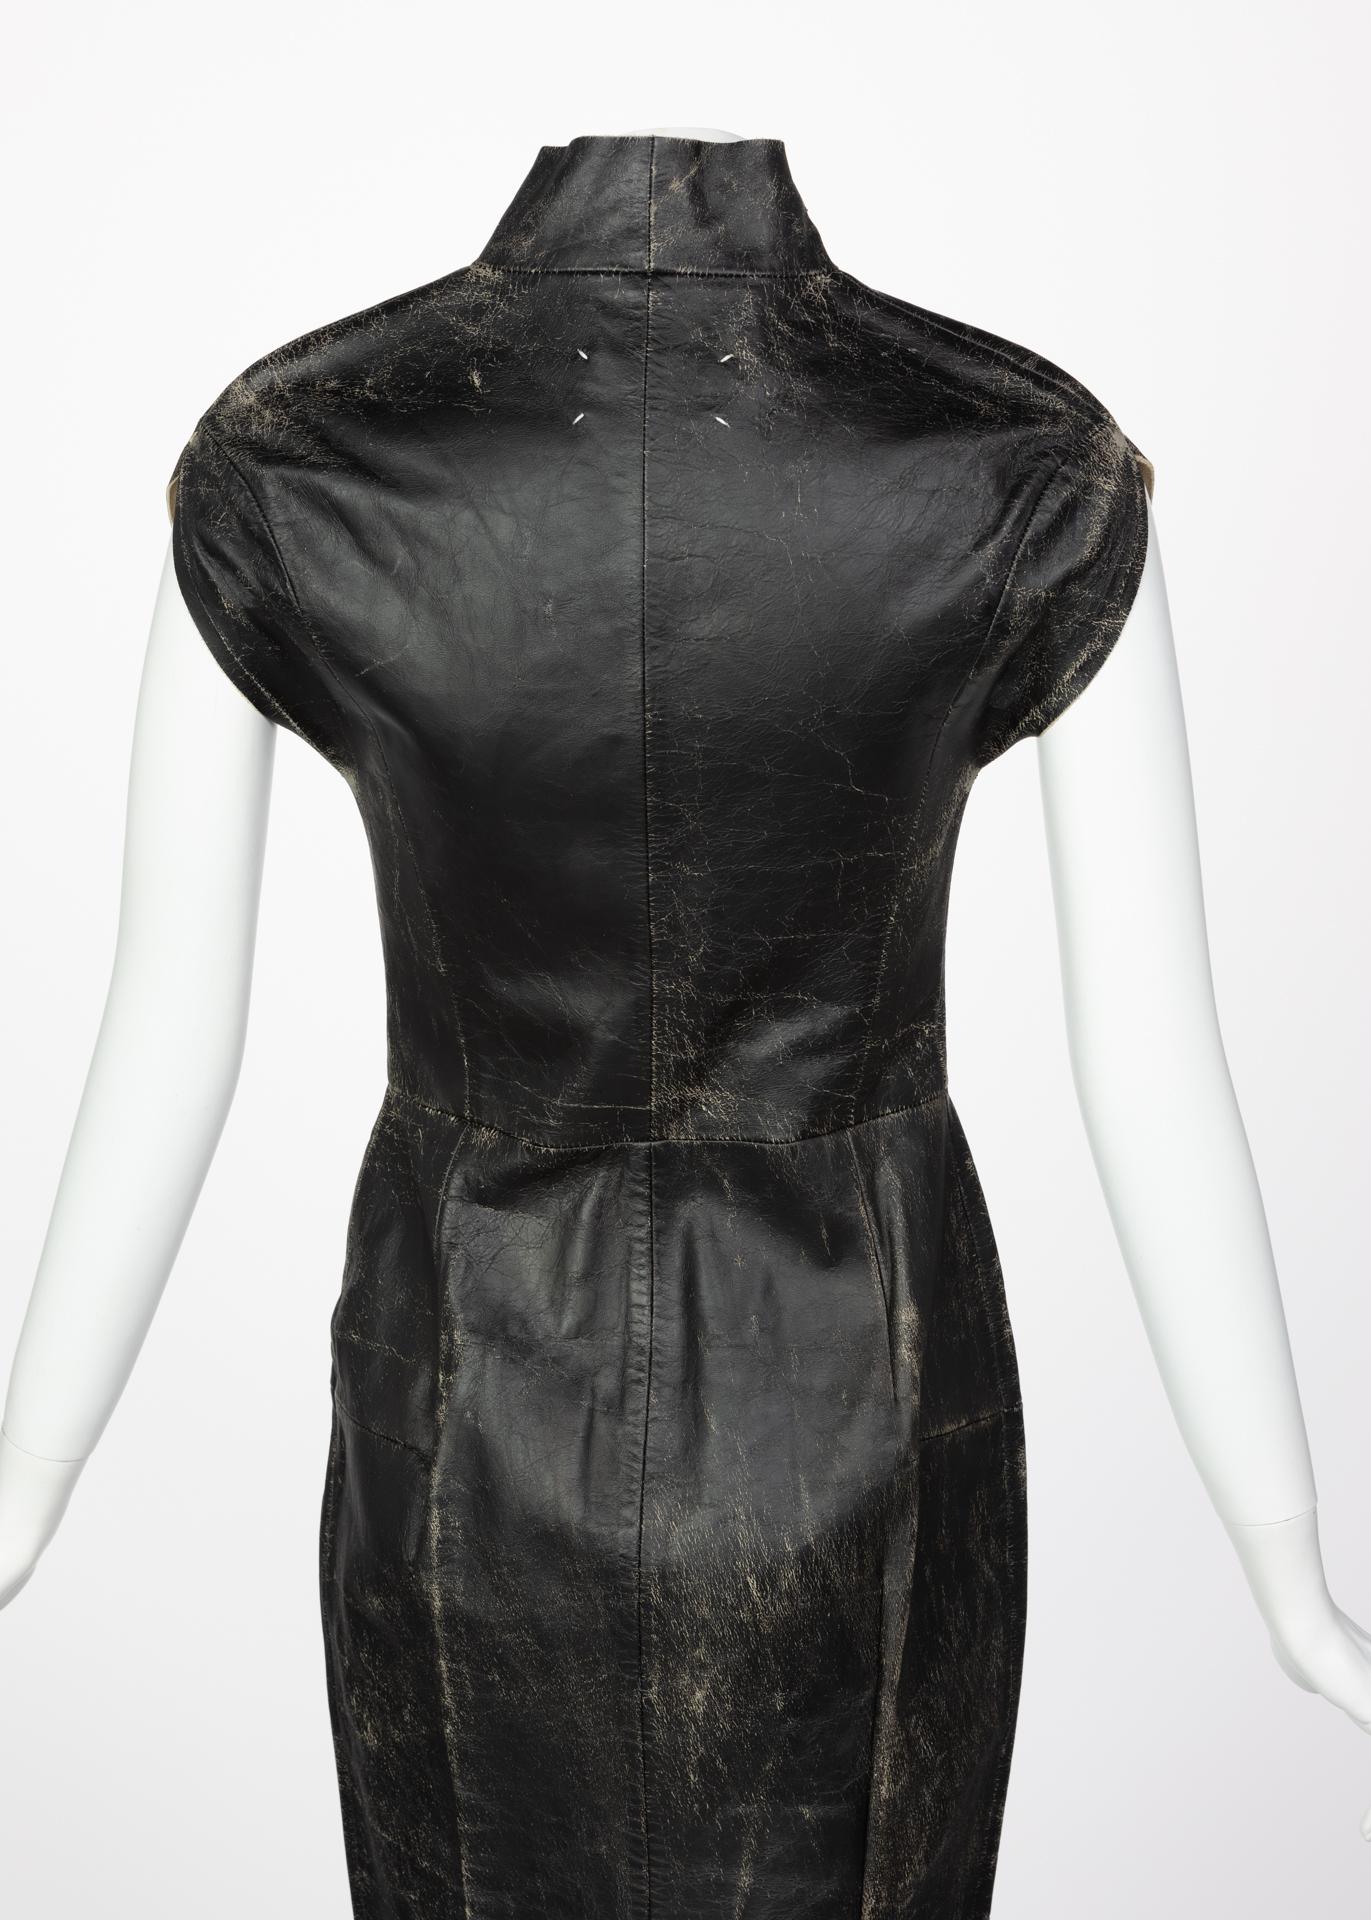 Women's Maison Martin Margiela White Label Black Leather Zipper Dress, 2012